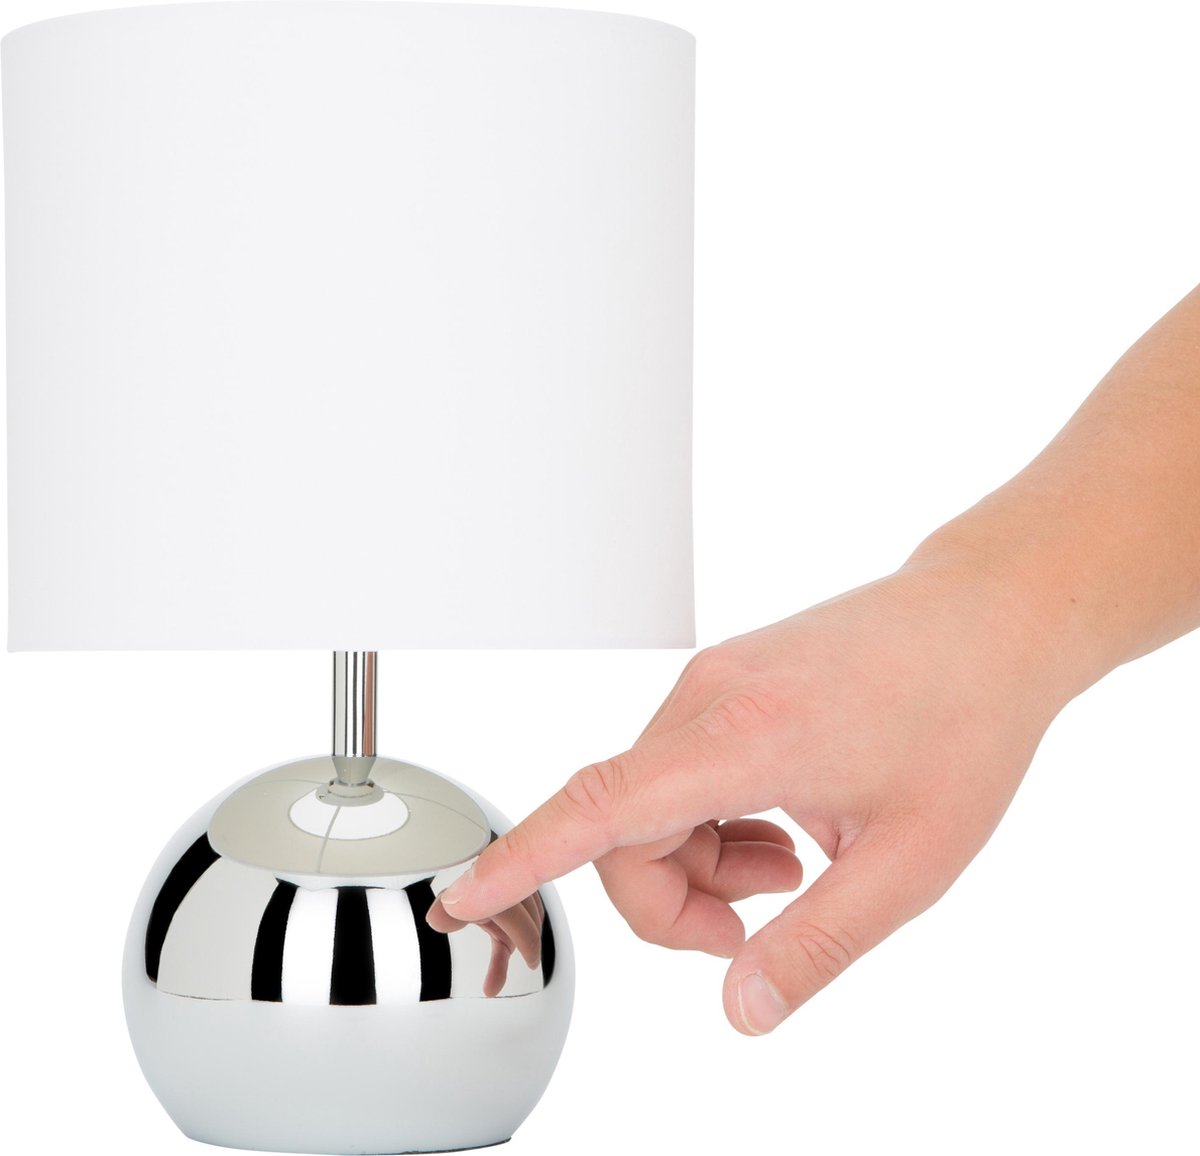 Ranex Noa Tafellamp - Witte kap - touch- en dimfunctie | bol.com